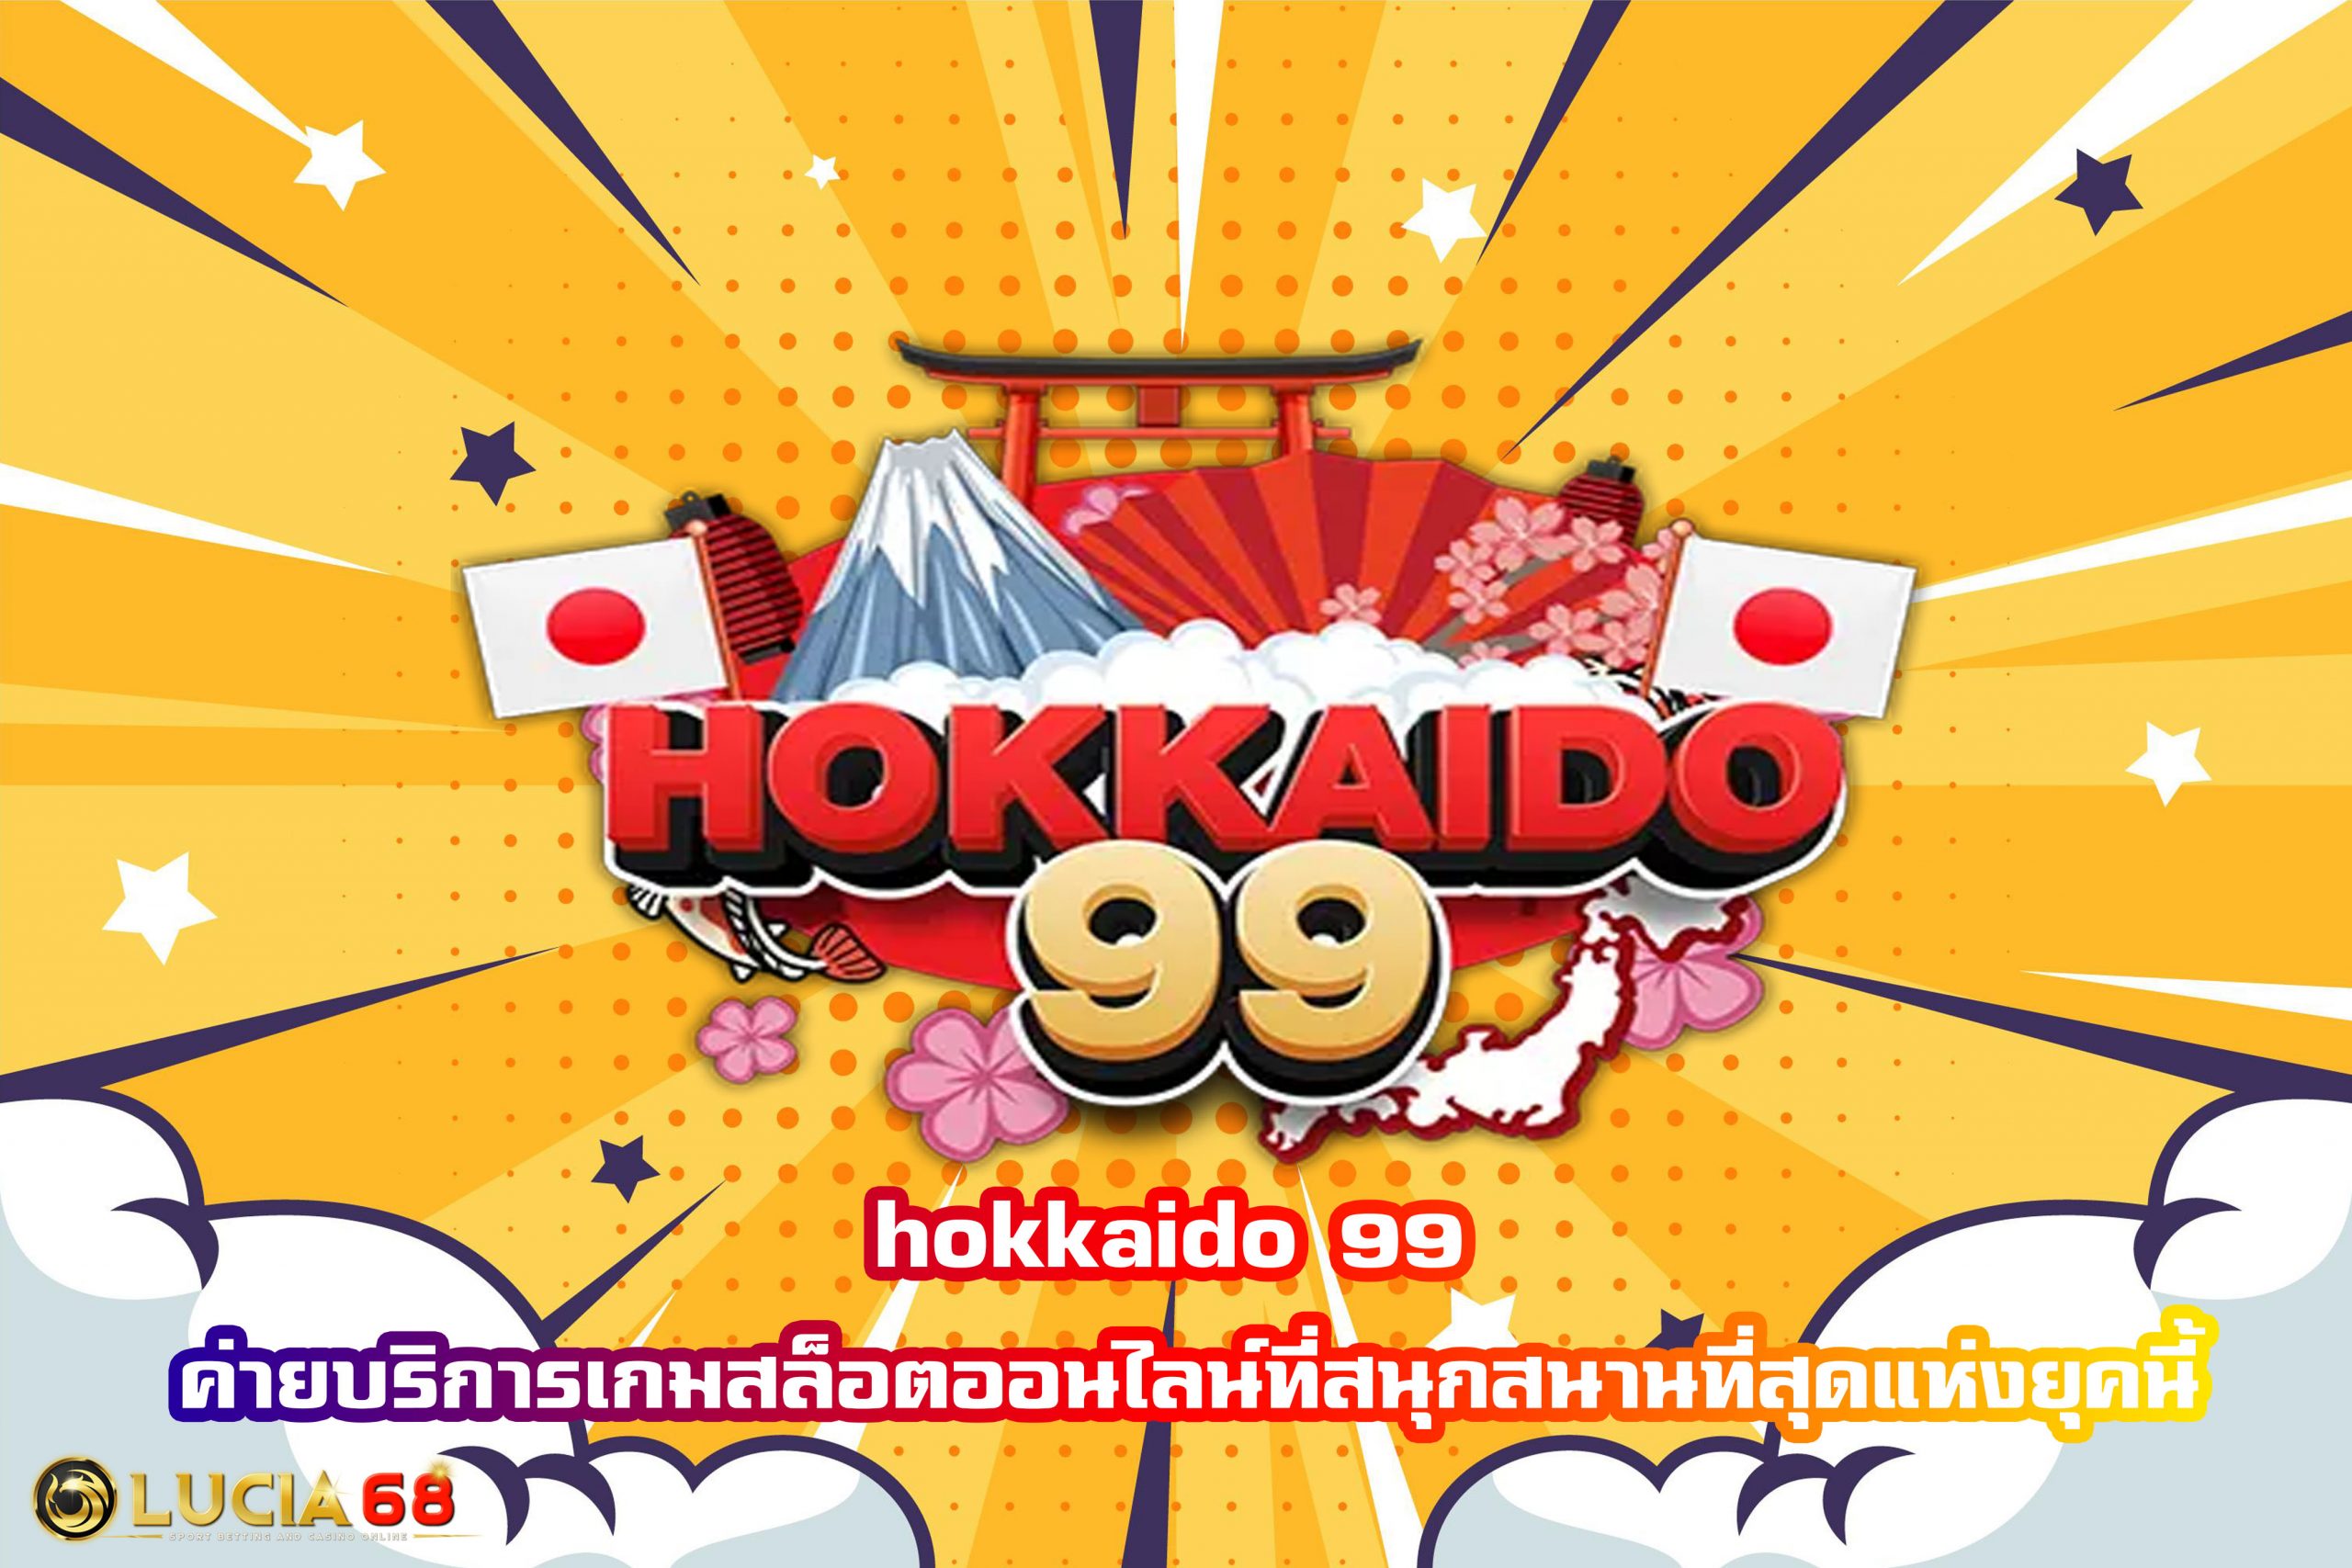 hokkaido 99 ค่ายบริการเกมสล็อตออนไลน์ที่สนุกสนานที่สุดแห่งยุคนี้